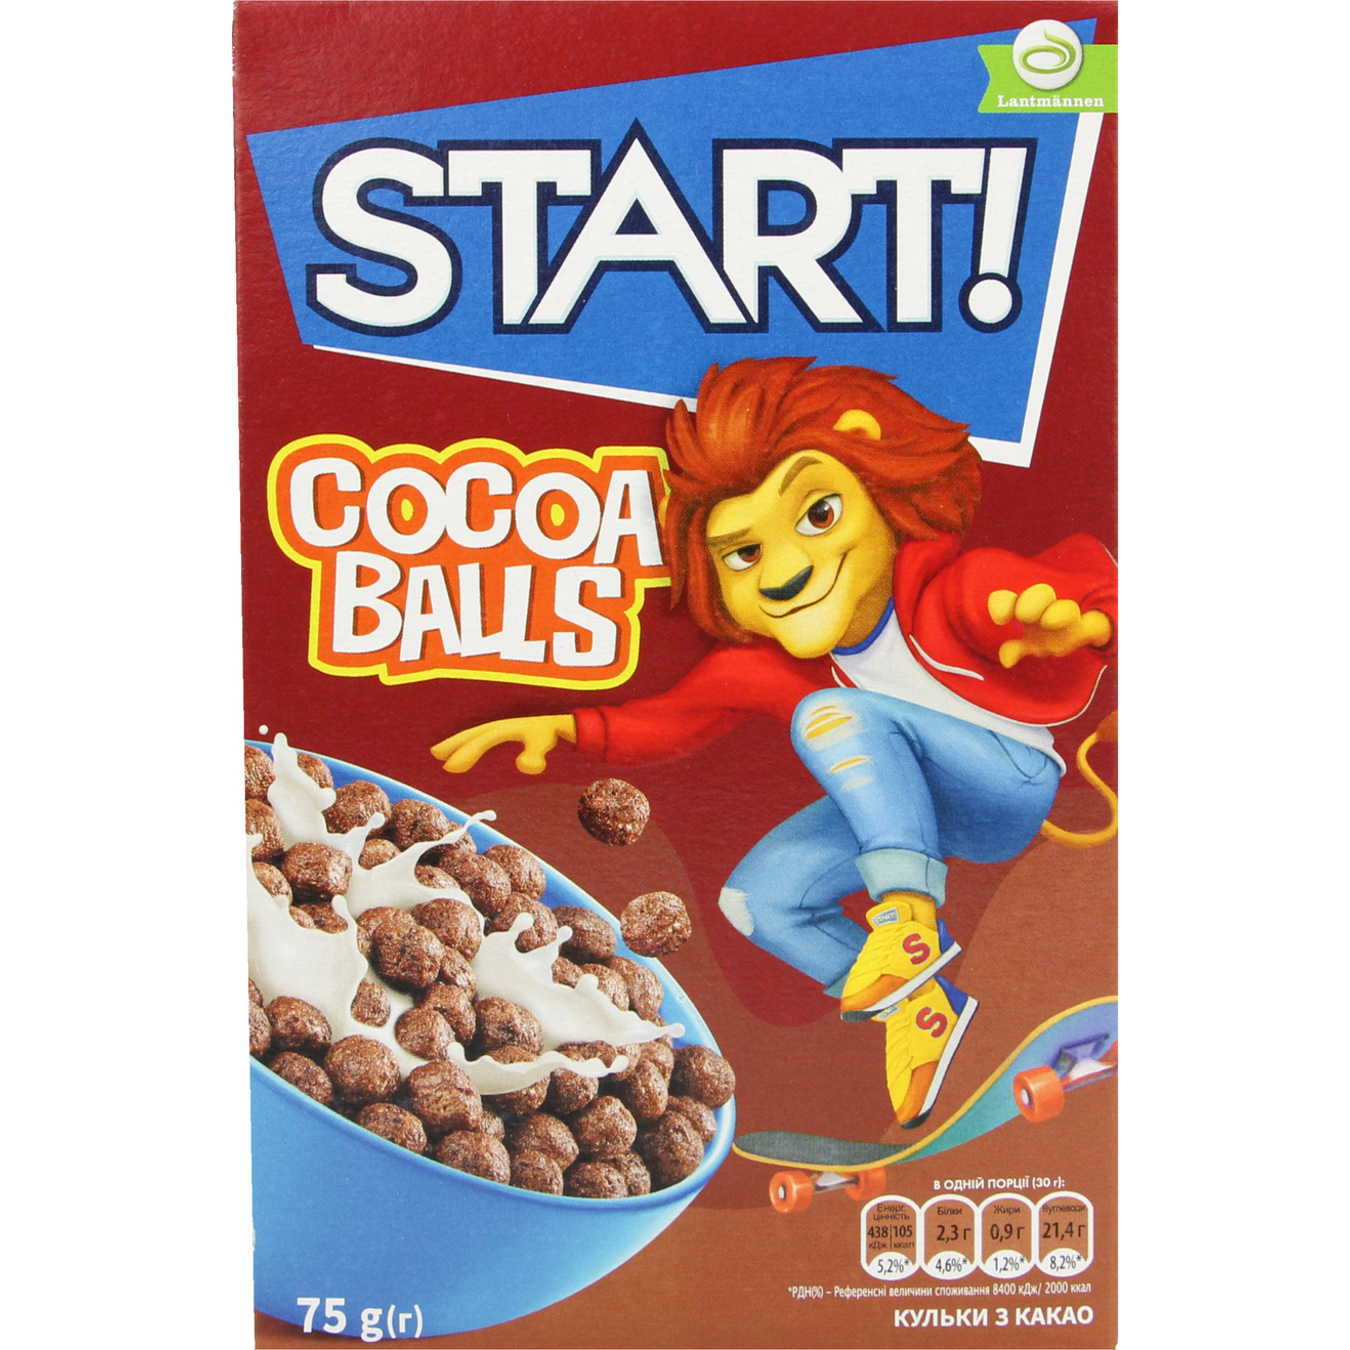 Start! Cocoa Balls Ready Cereal Breakfast 75g